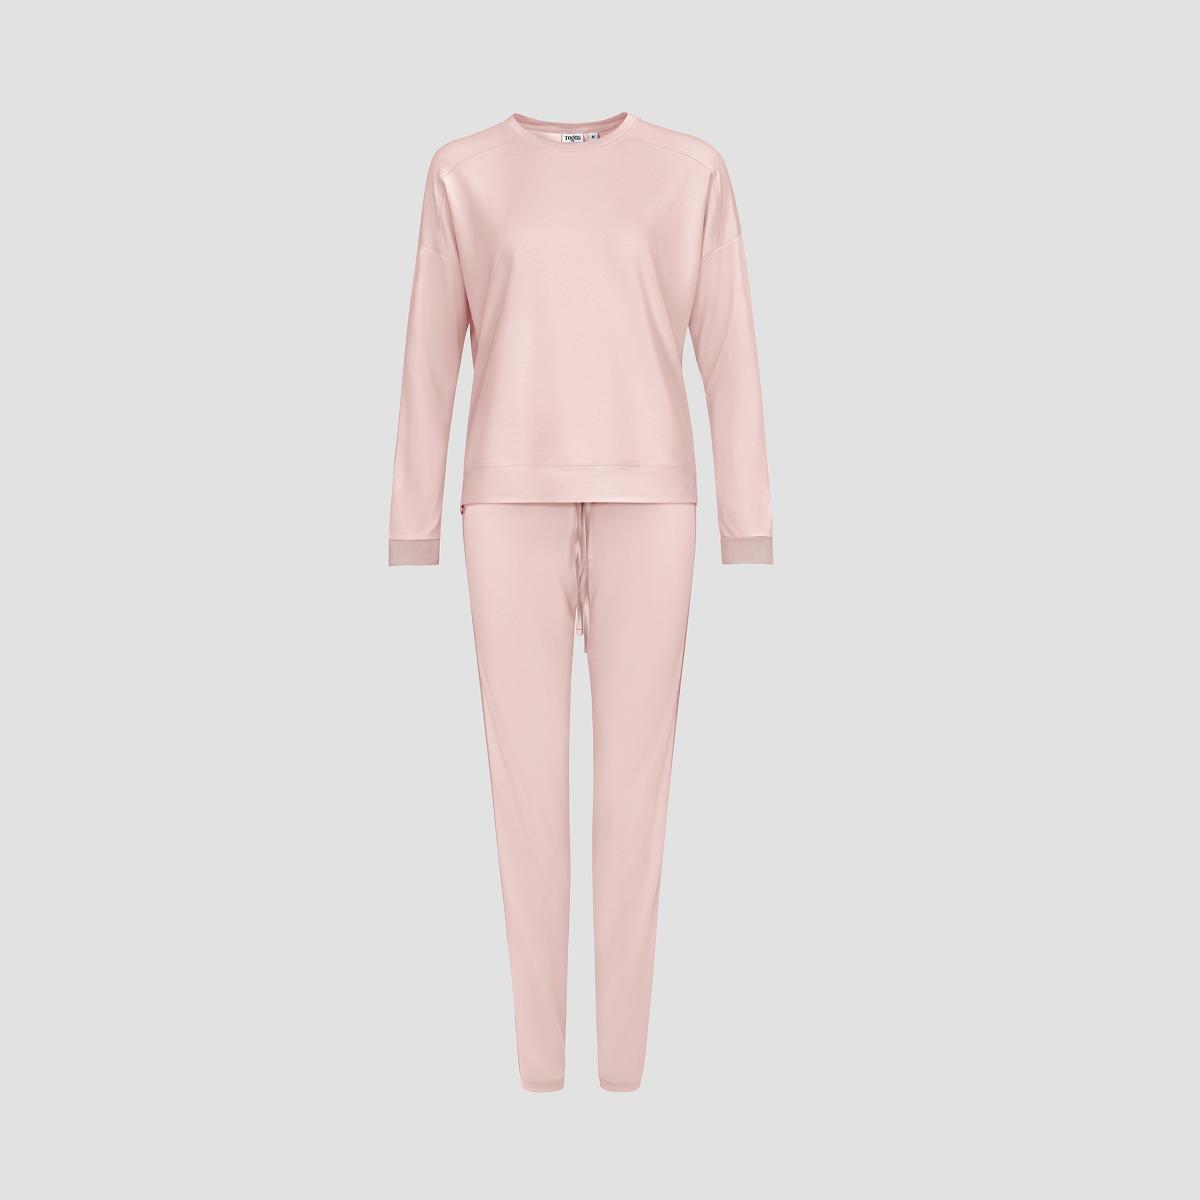 Пижама Togas Рене розовая женская xl(50), цвет розовый, размер XL (50) - фото 1